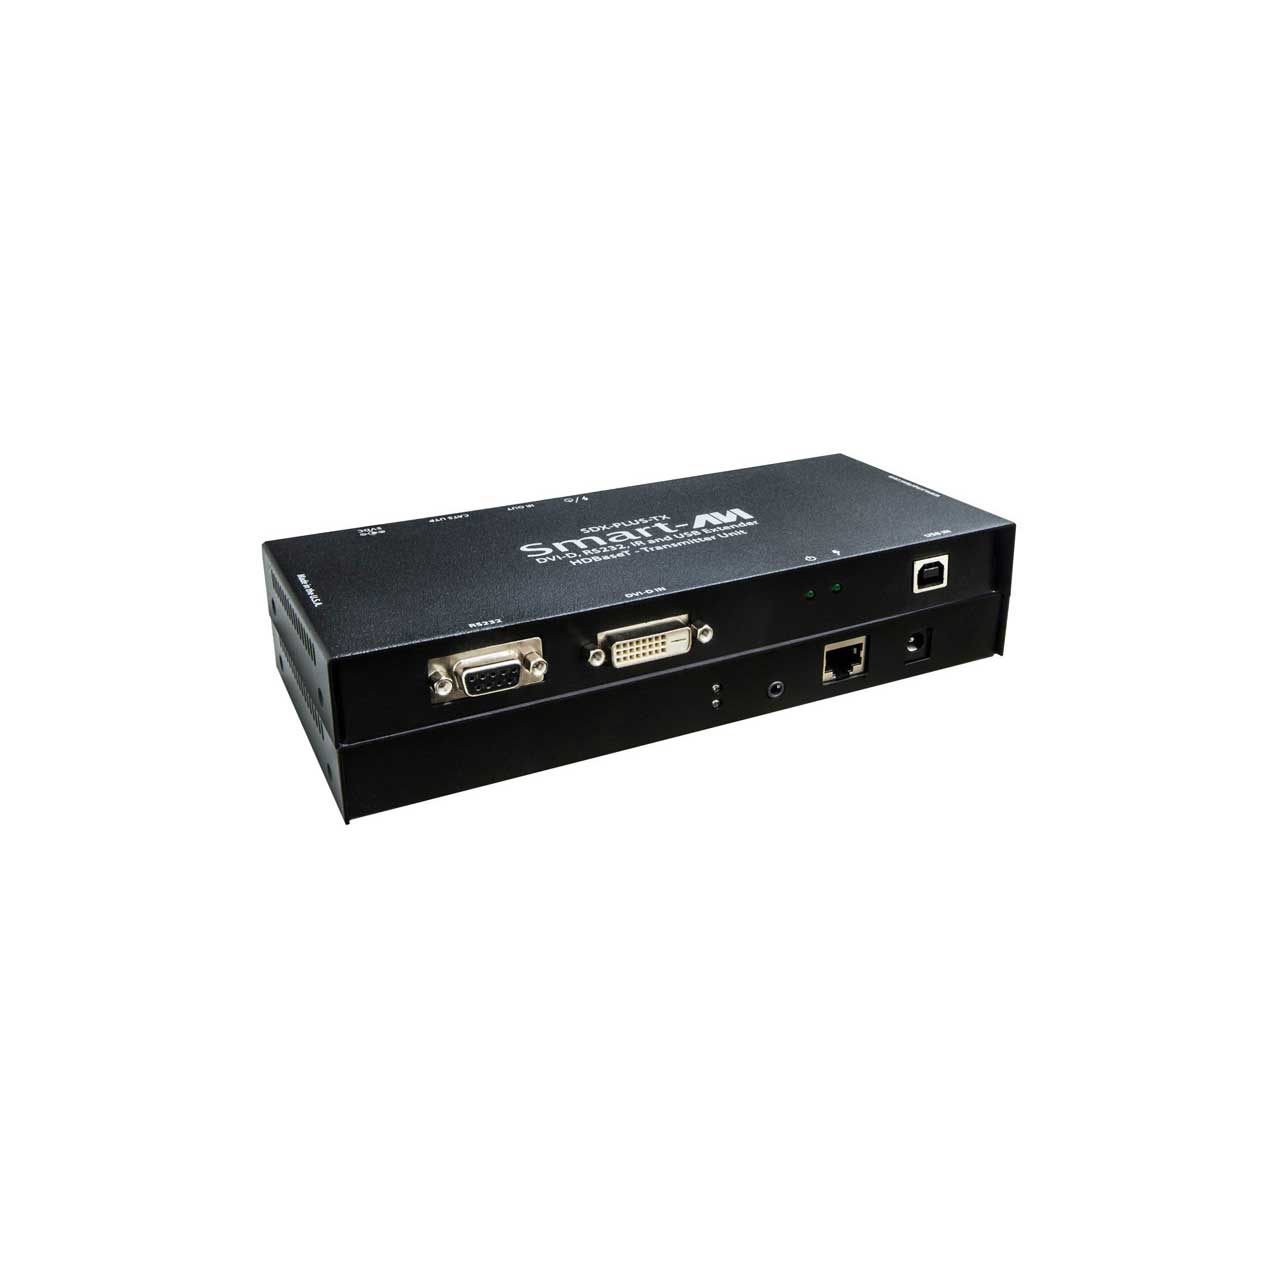 Ai image extender. RS 232 на DVI. KVM удлинитель USB. KVM удлинители производители. KVM удлинители для web камеры.